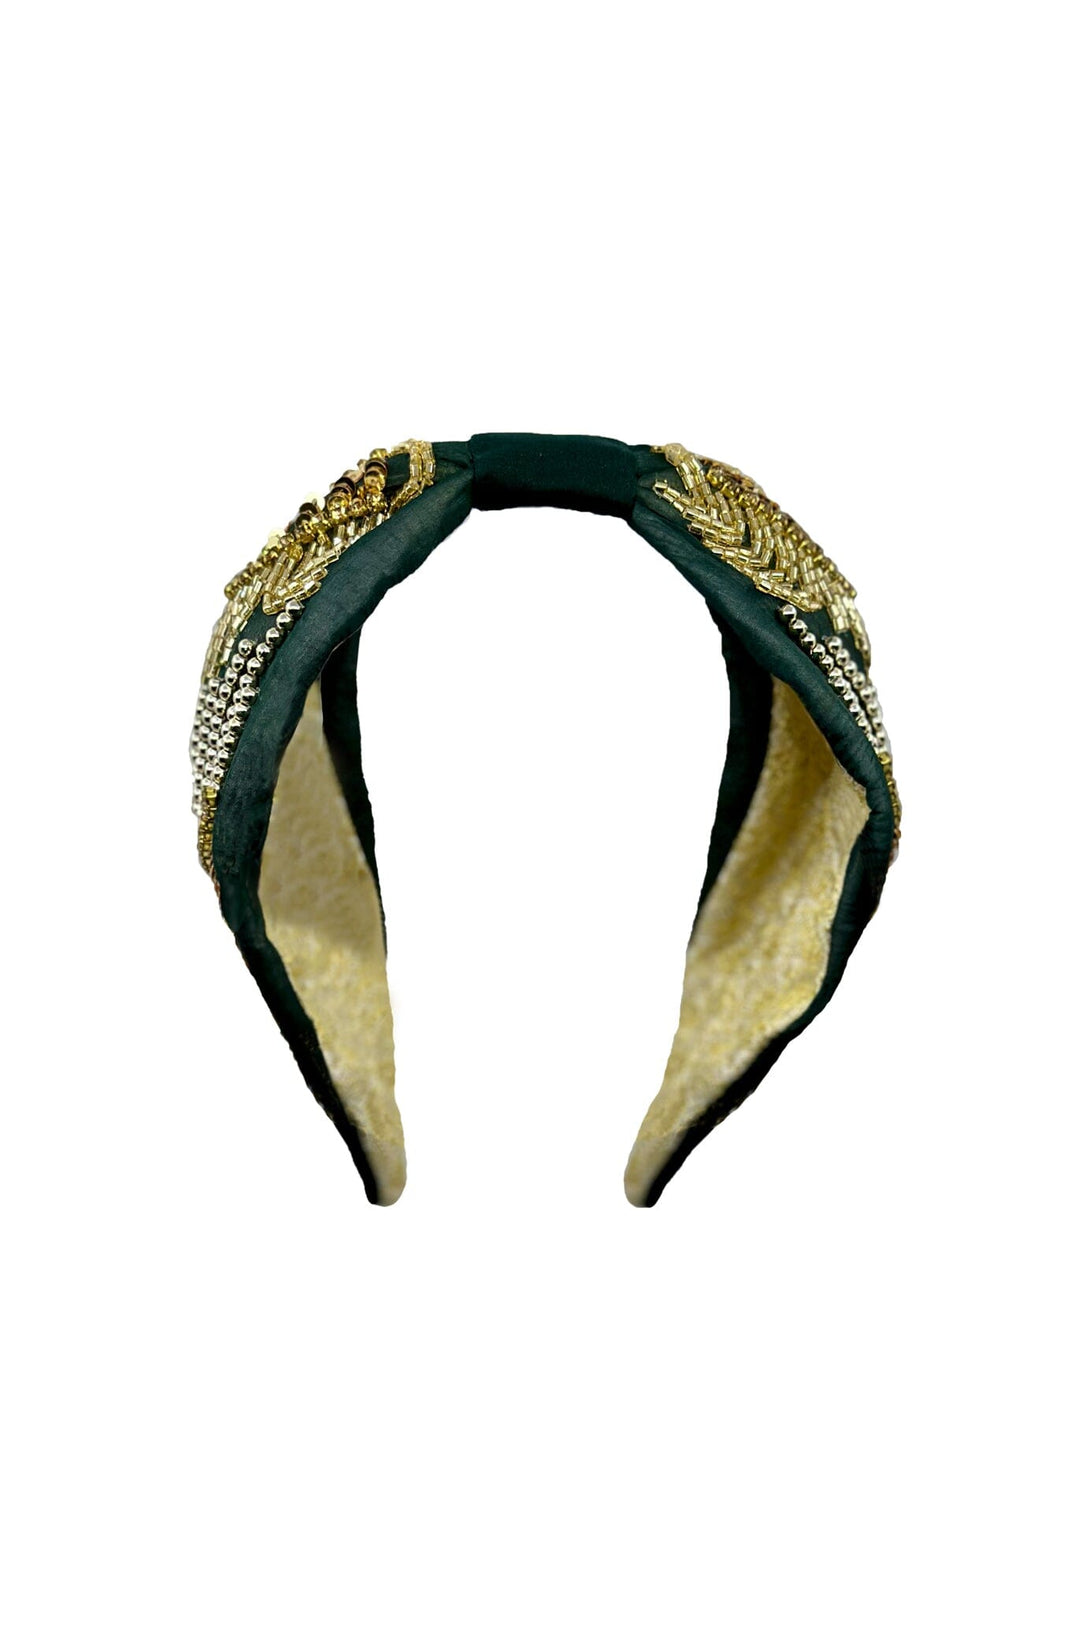 Abella Embellished Headband Olive - Pre Order Accessories